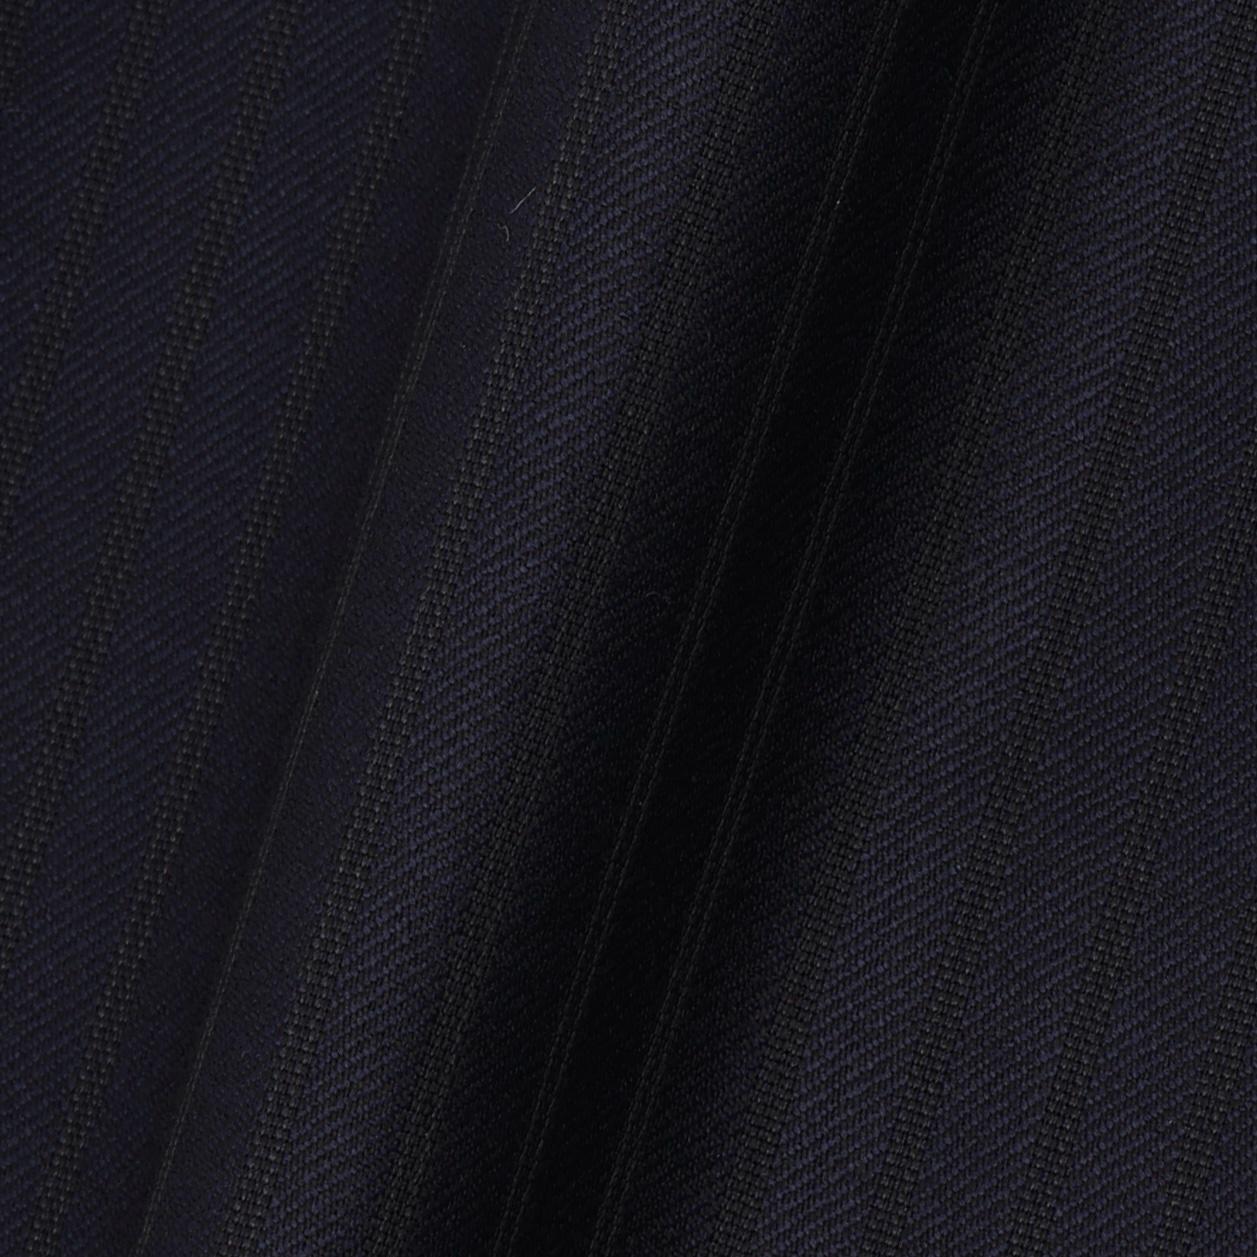 Zegna Winter Fabric #2630/0099